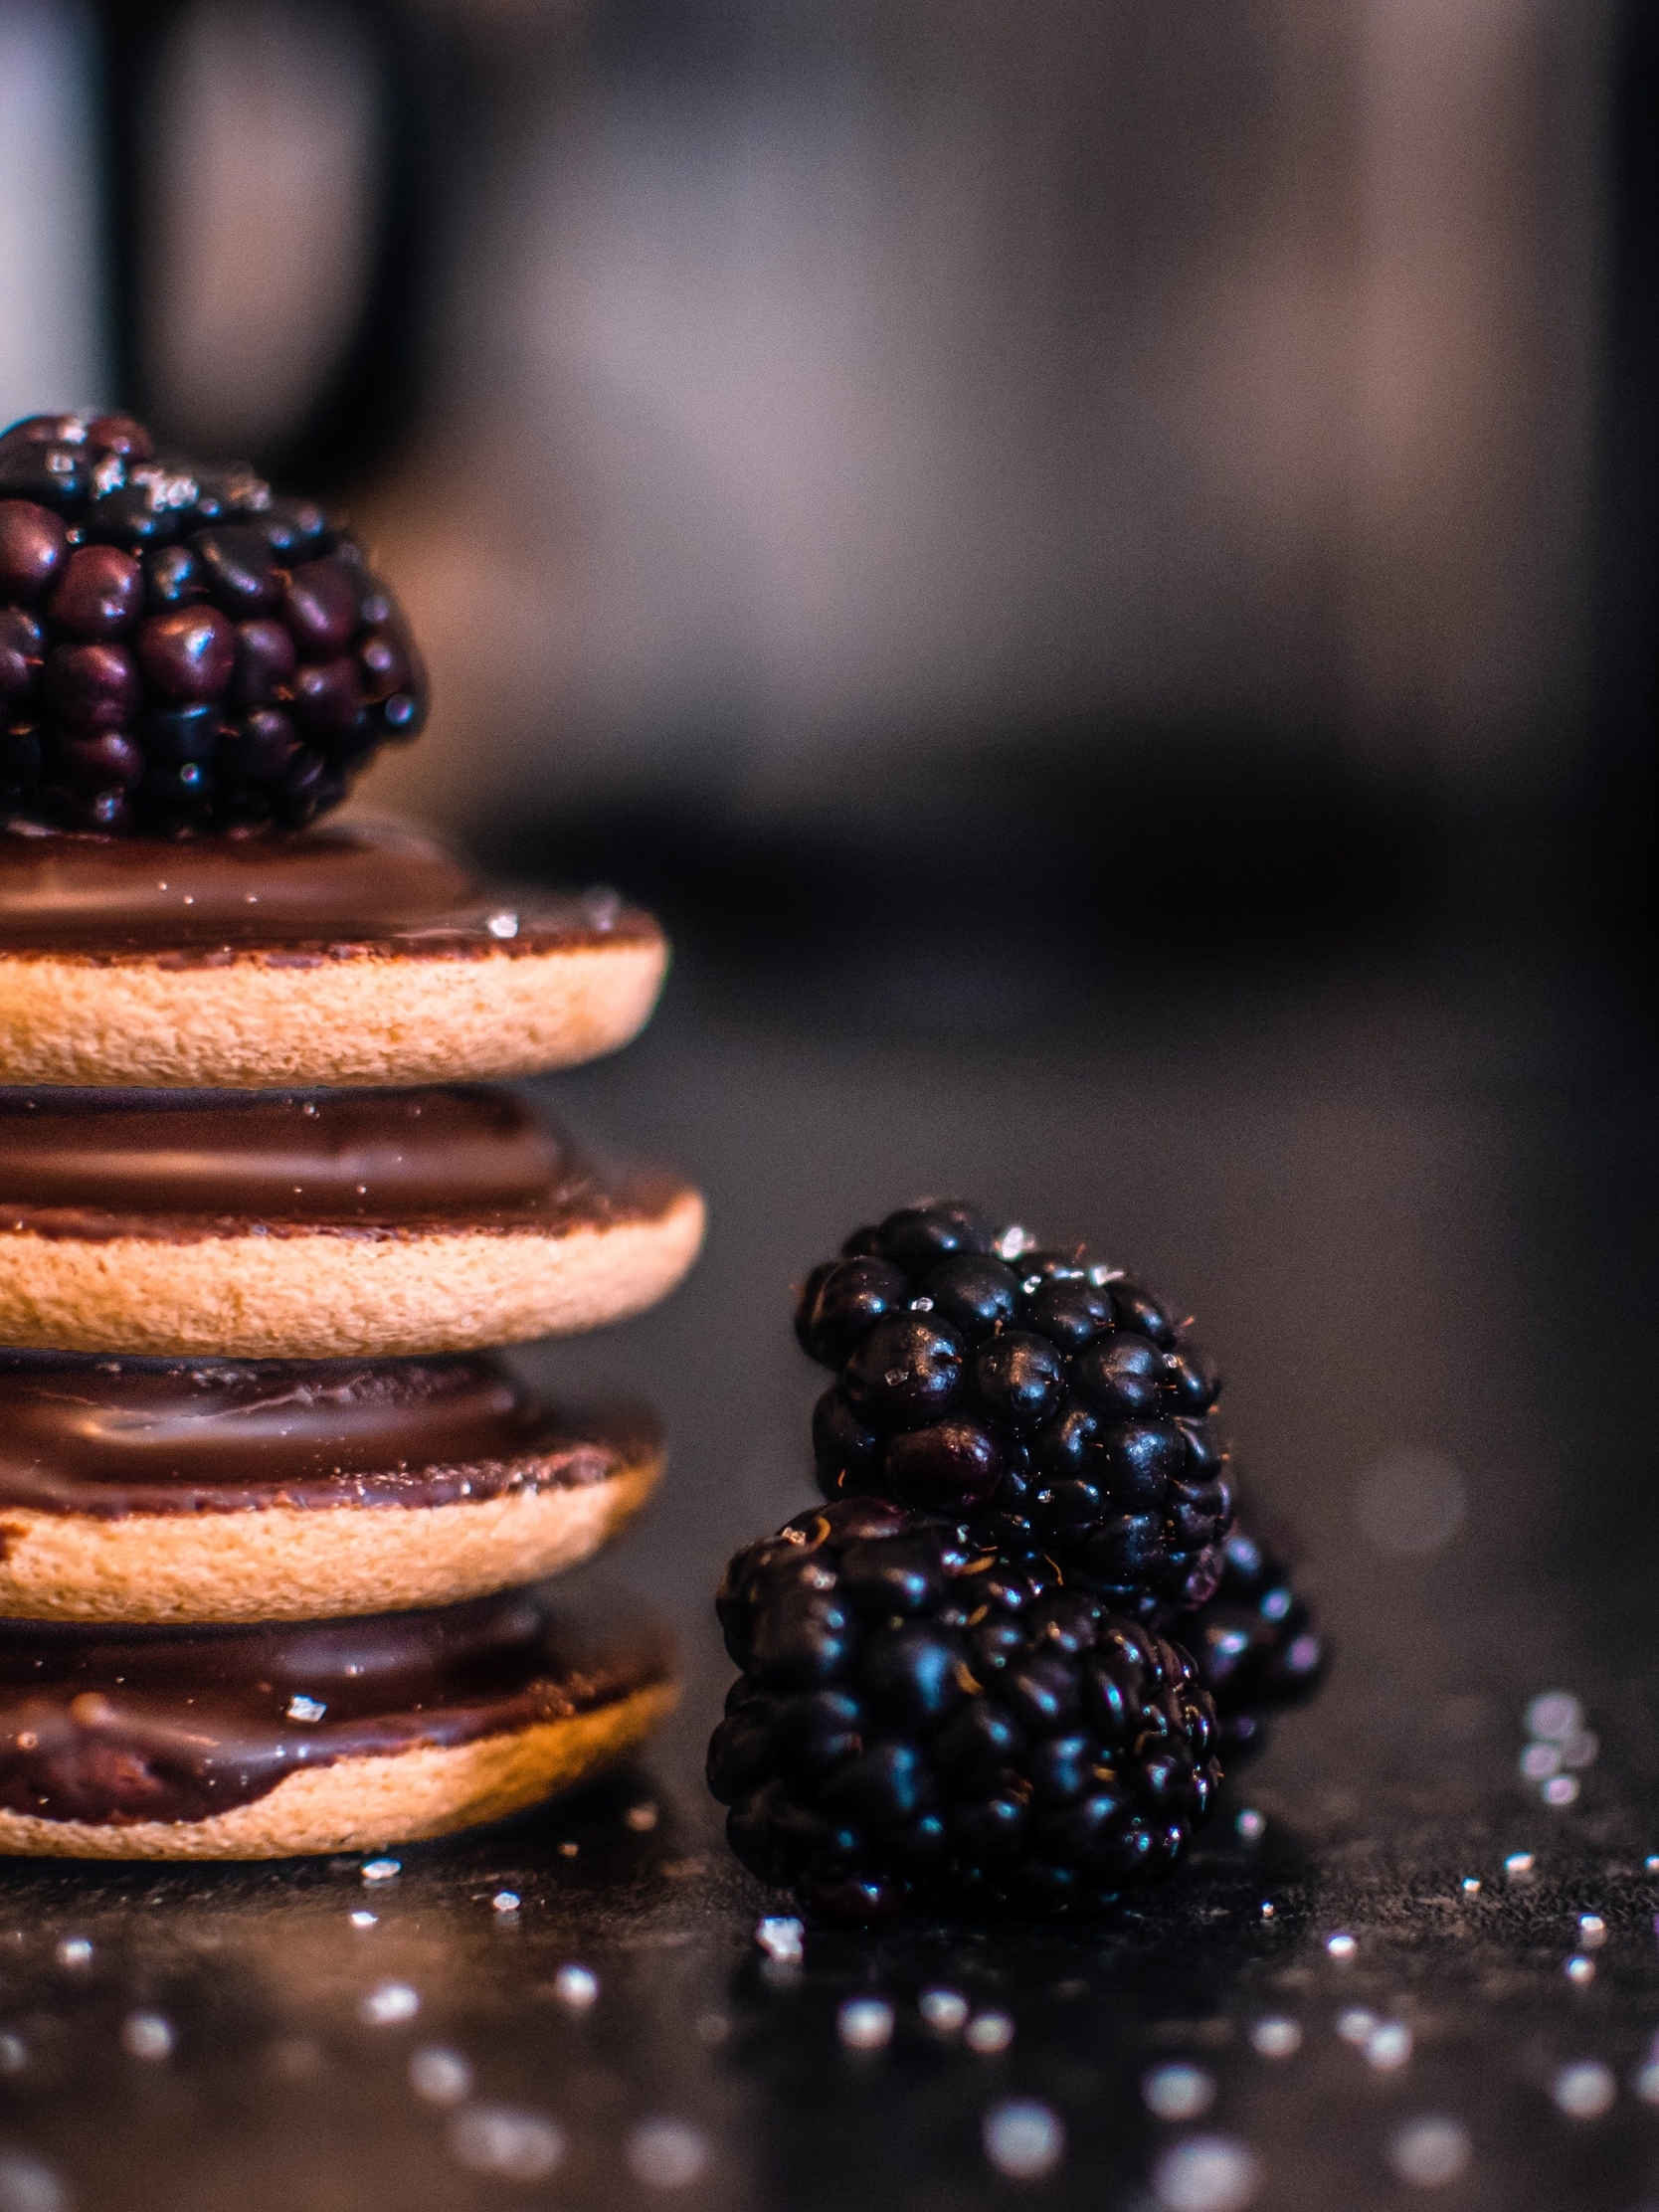 Image: Cookies, chocolate, blackberry, berry